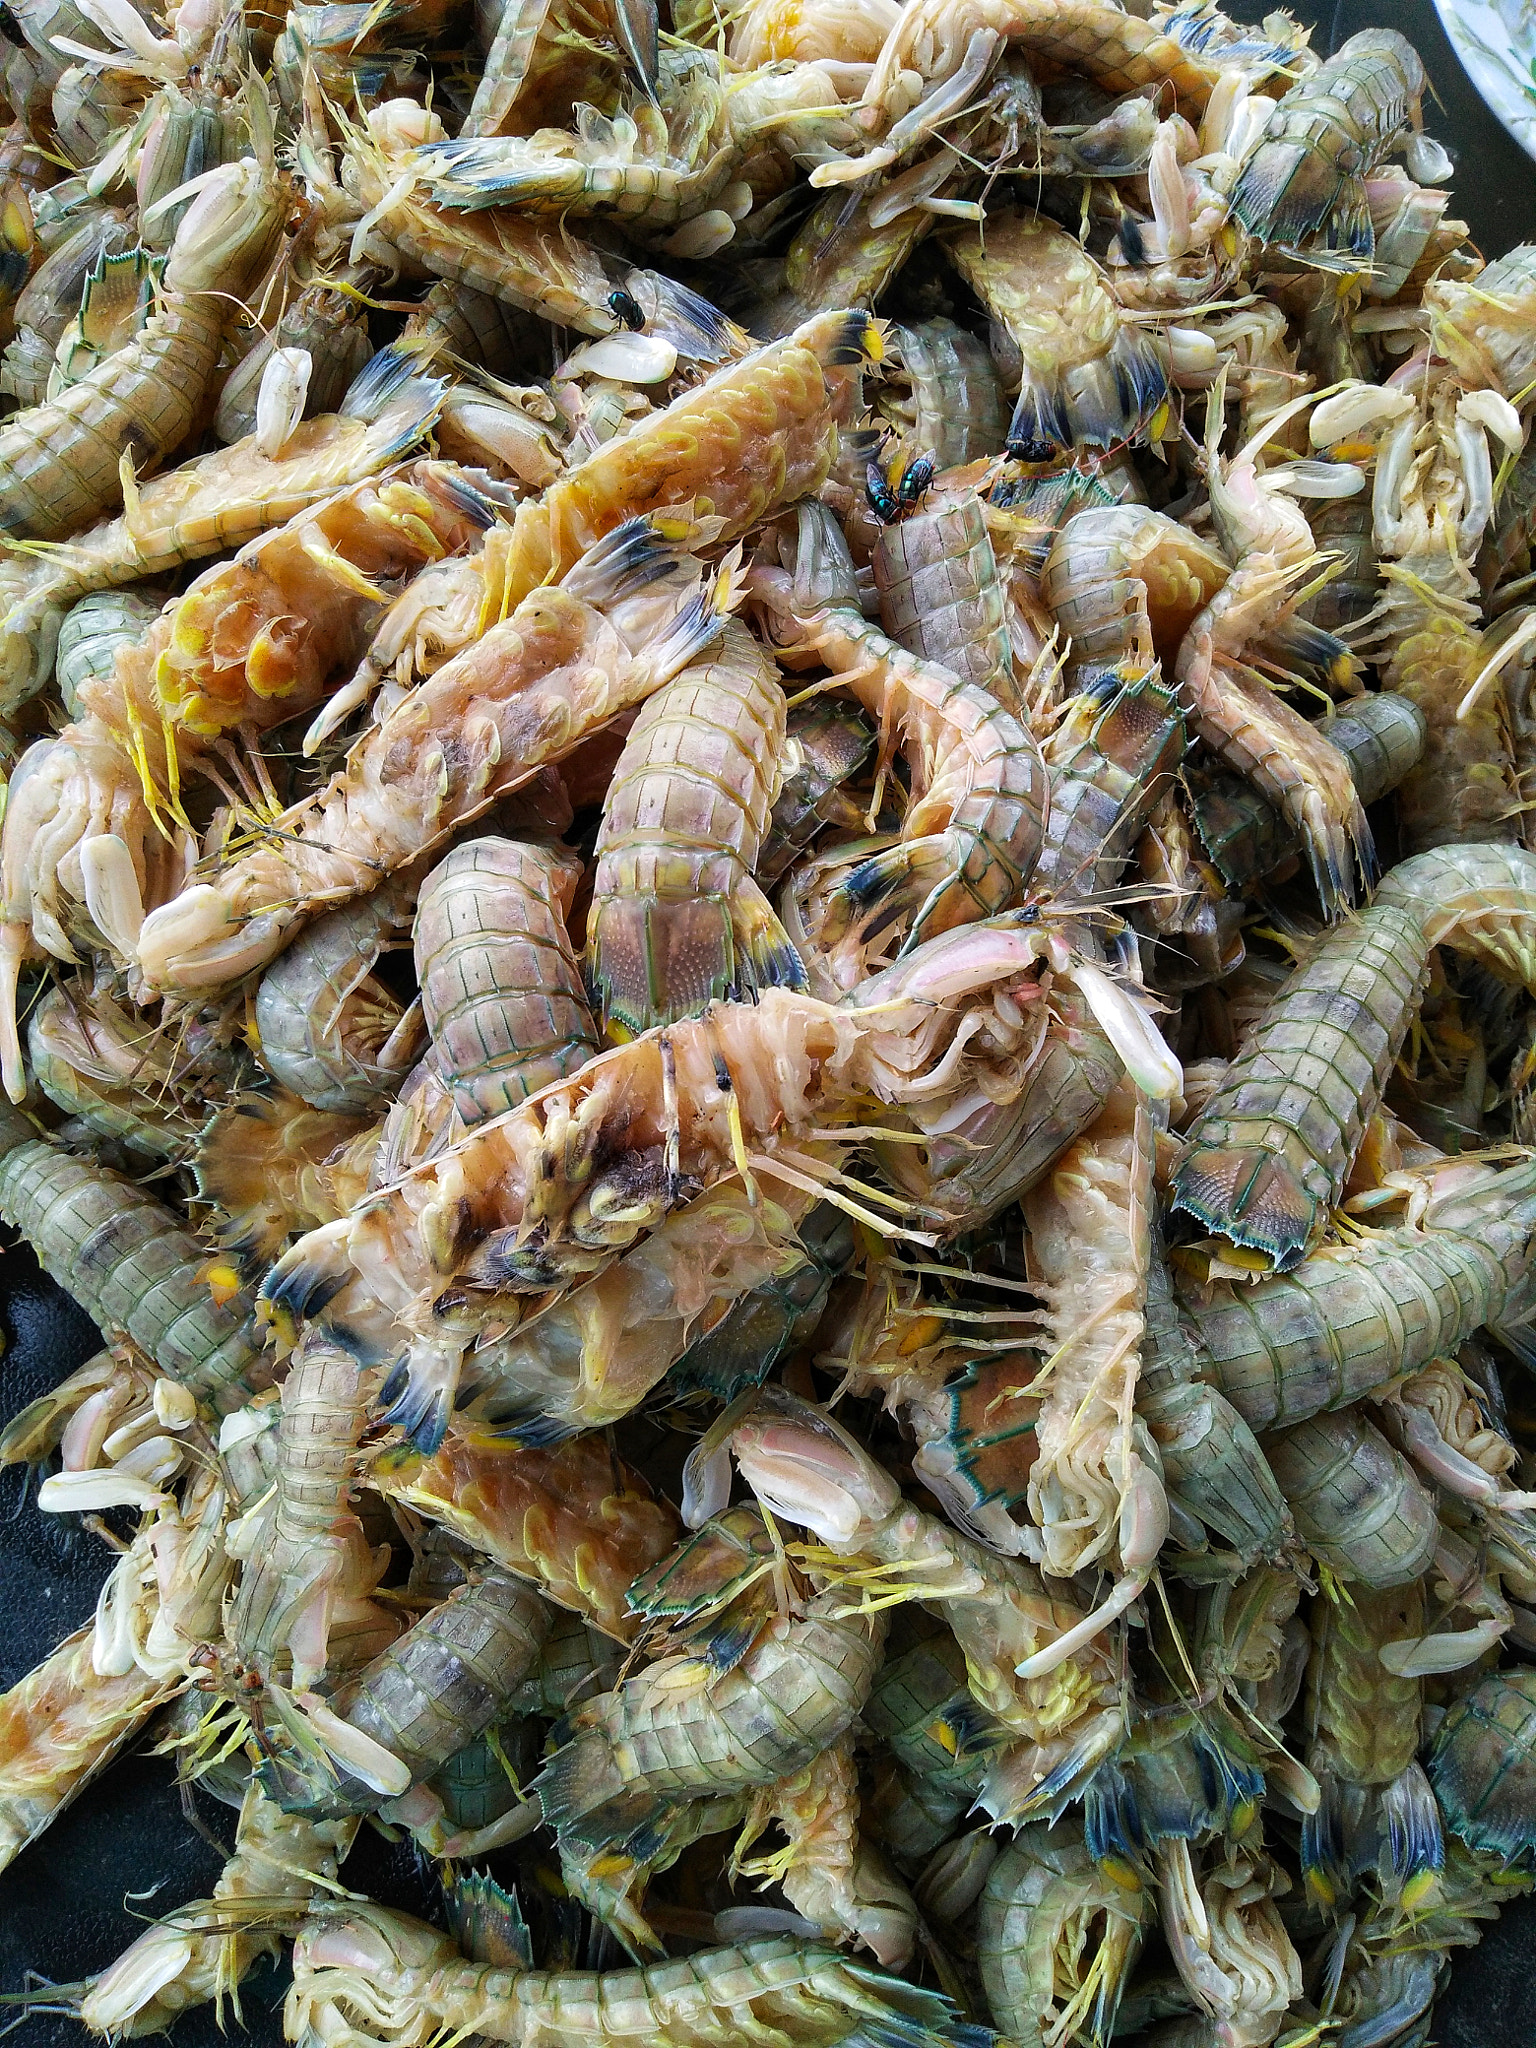 OPPO F1f sample photo. Sand shrimp in farmer's market photography